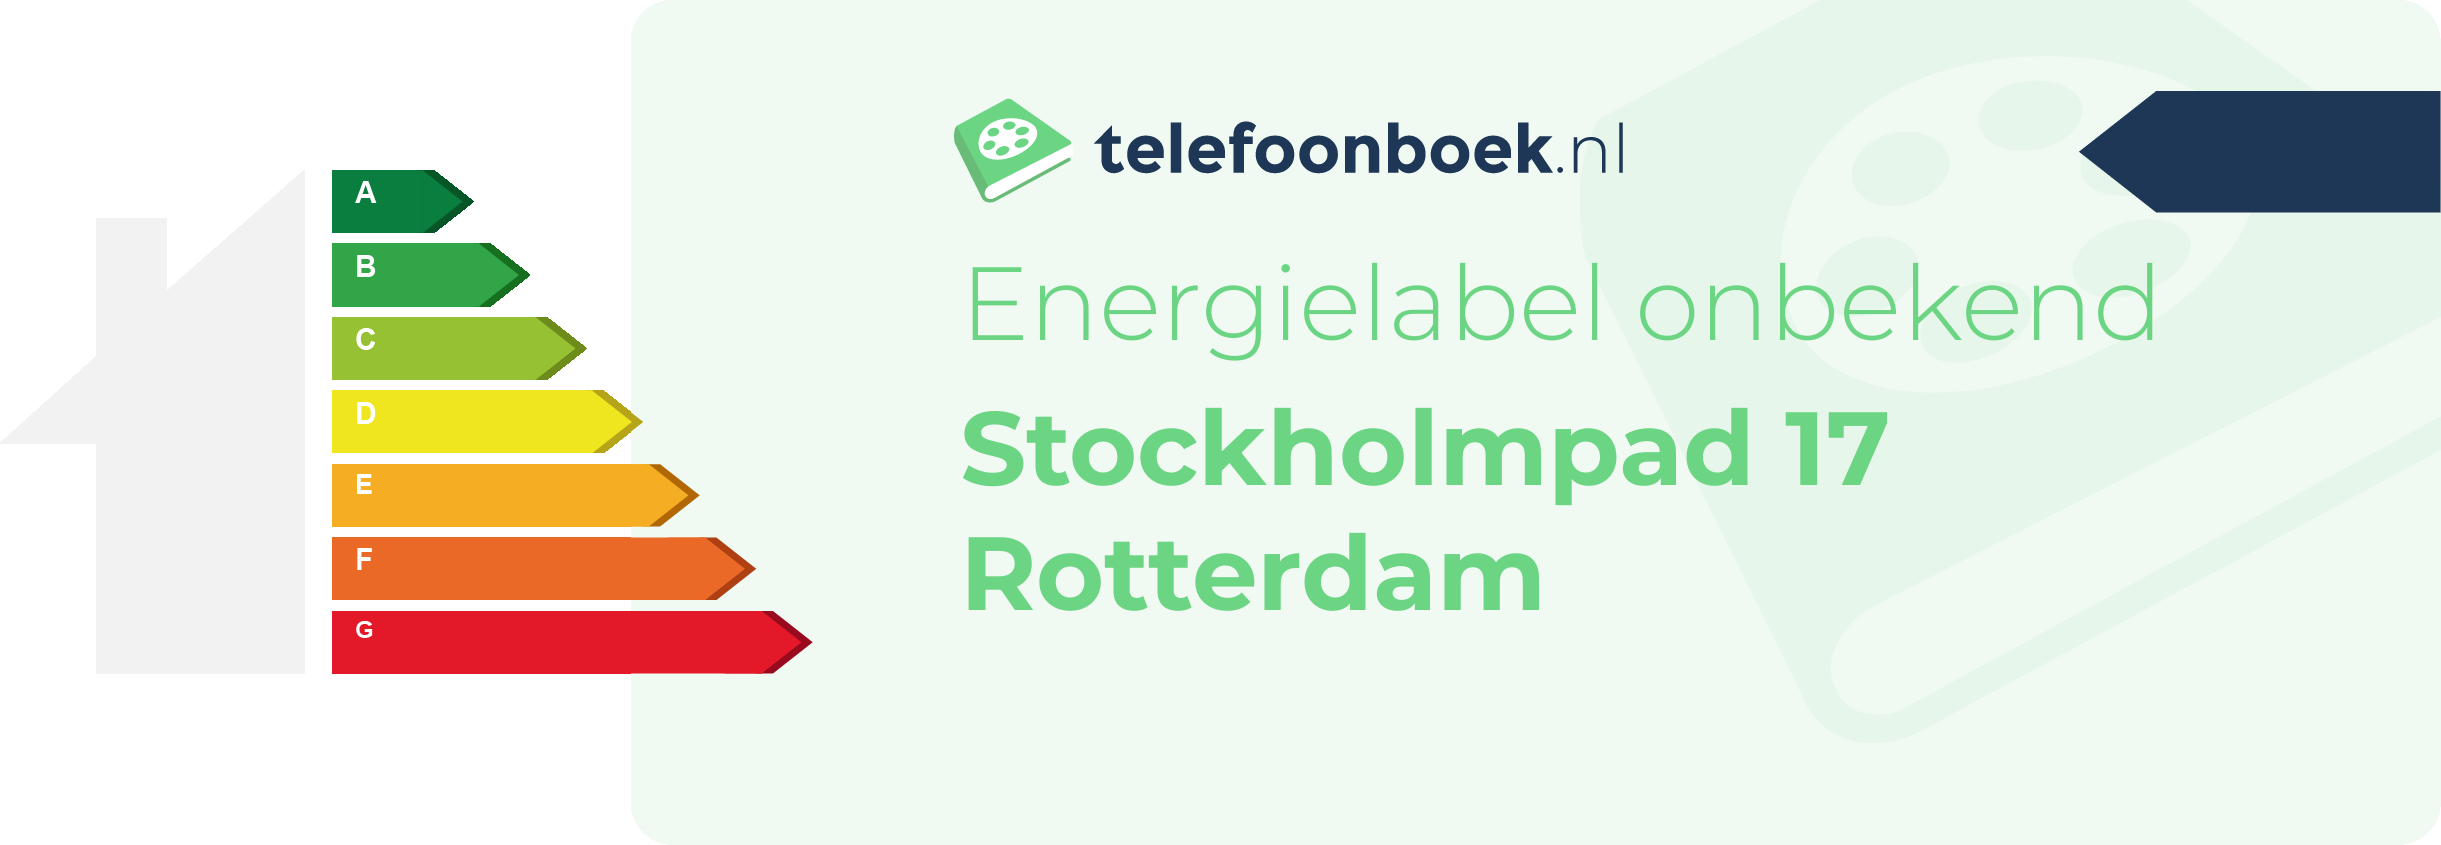 Energielabel Stockholmpad 17 Rotterdam